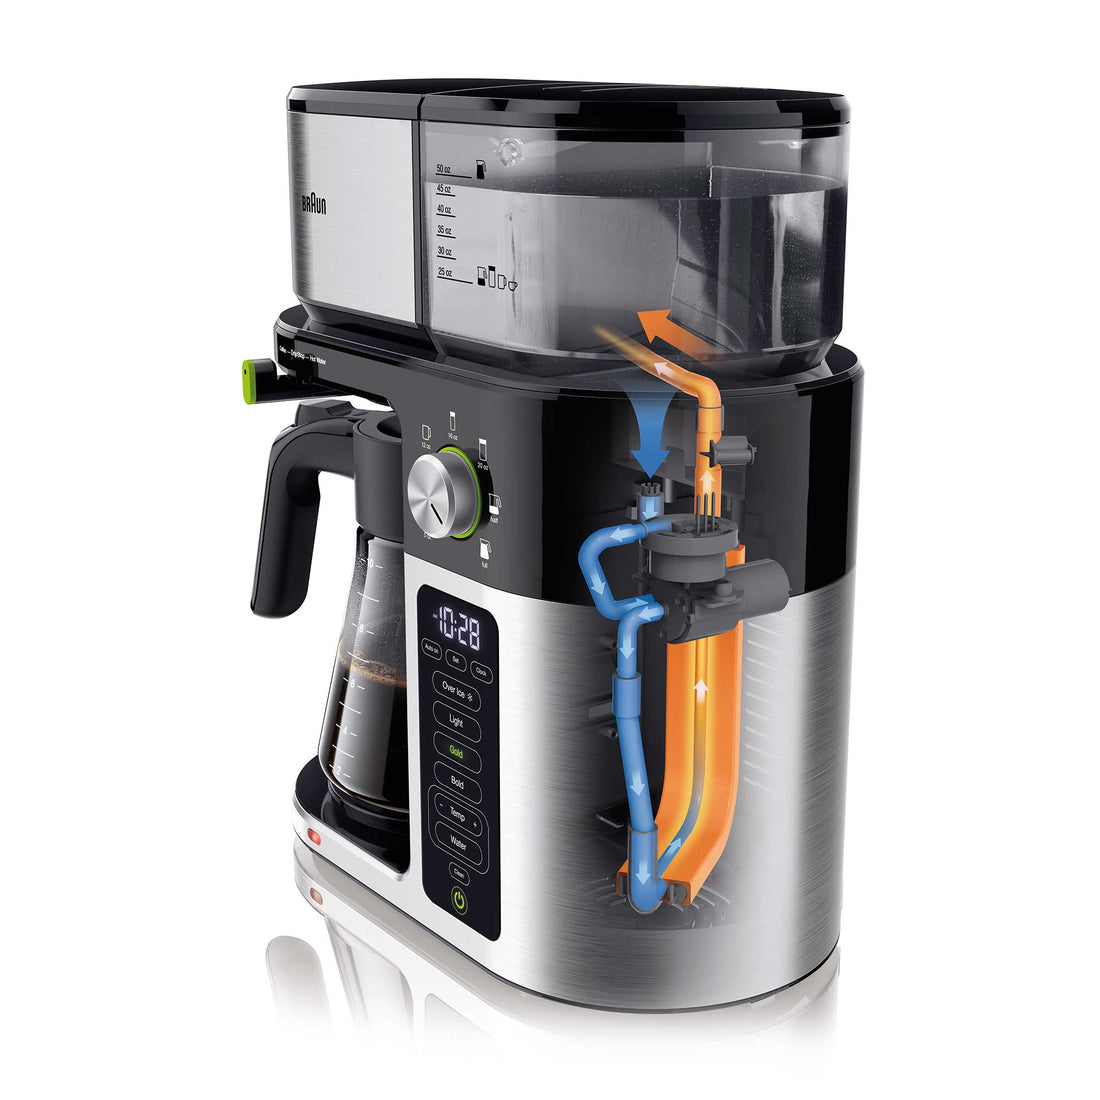 Braun Multiserve Drip Coffee Maker - Kf9050 - Target Certified Refurbished  : Target